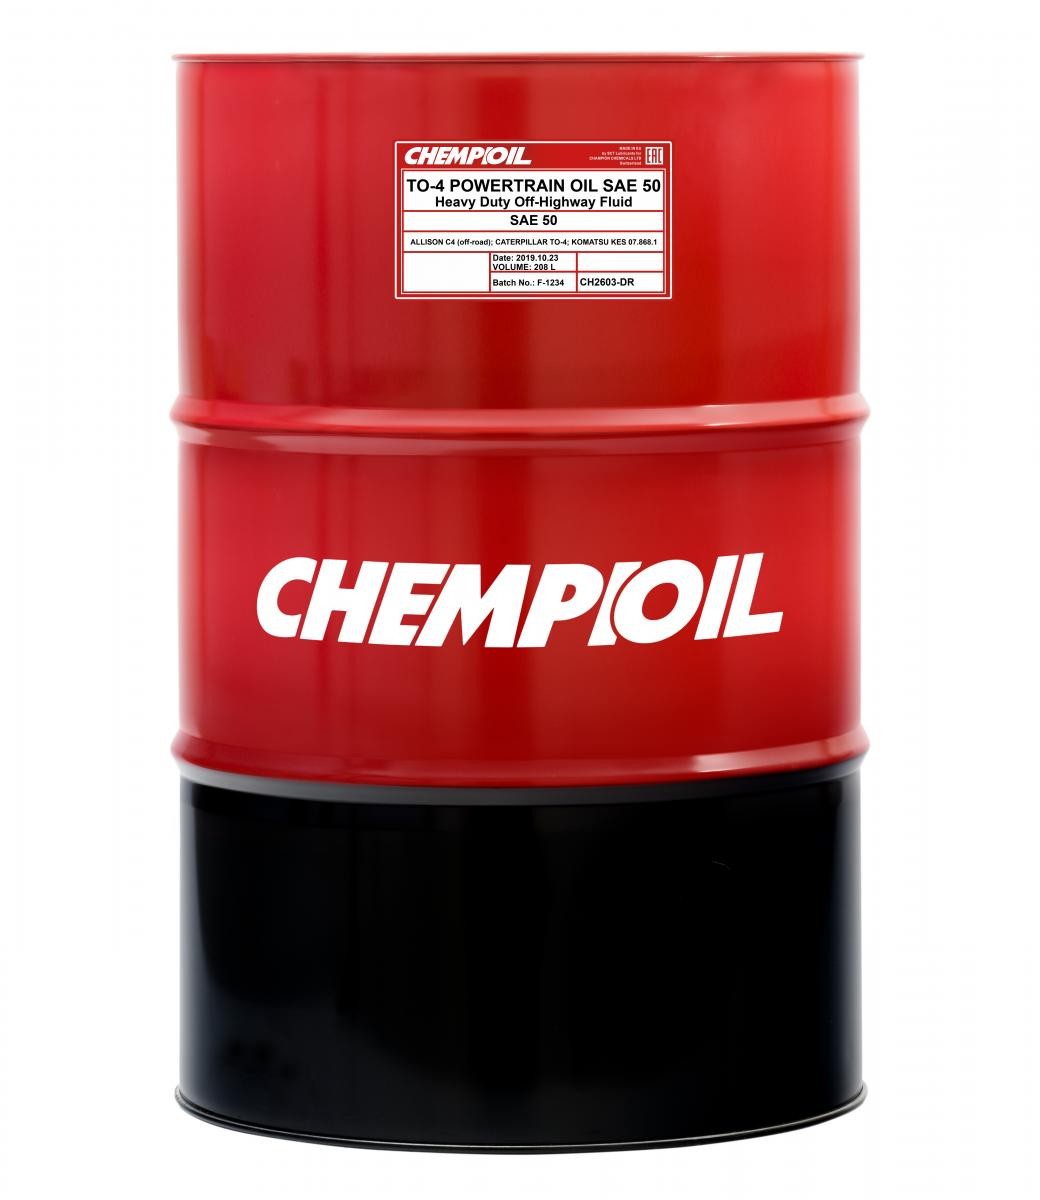 CHEMPIOIL POWERTRAIN OIL, TO-4 CH2603-DR Engine oil SAE 50, 208l